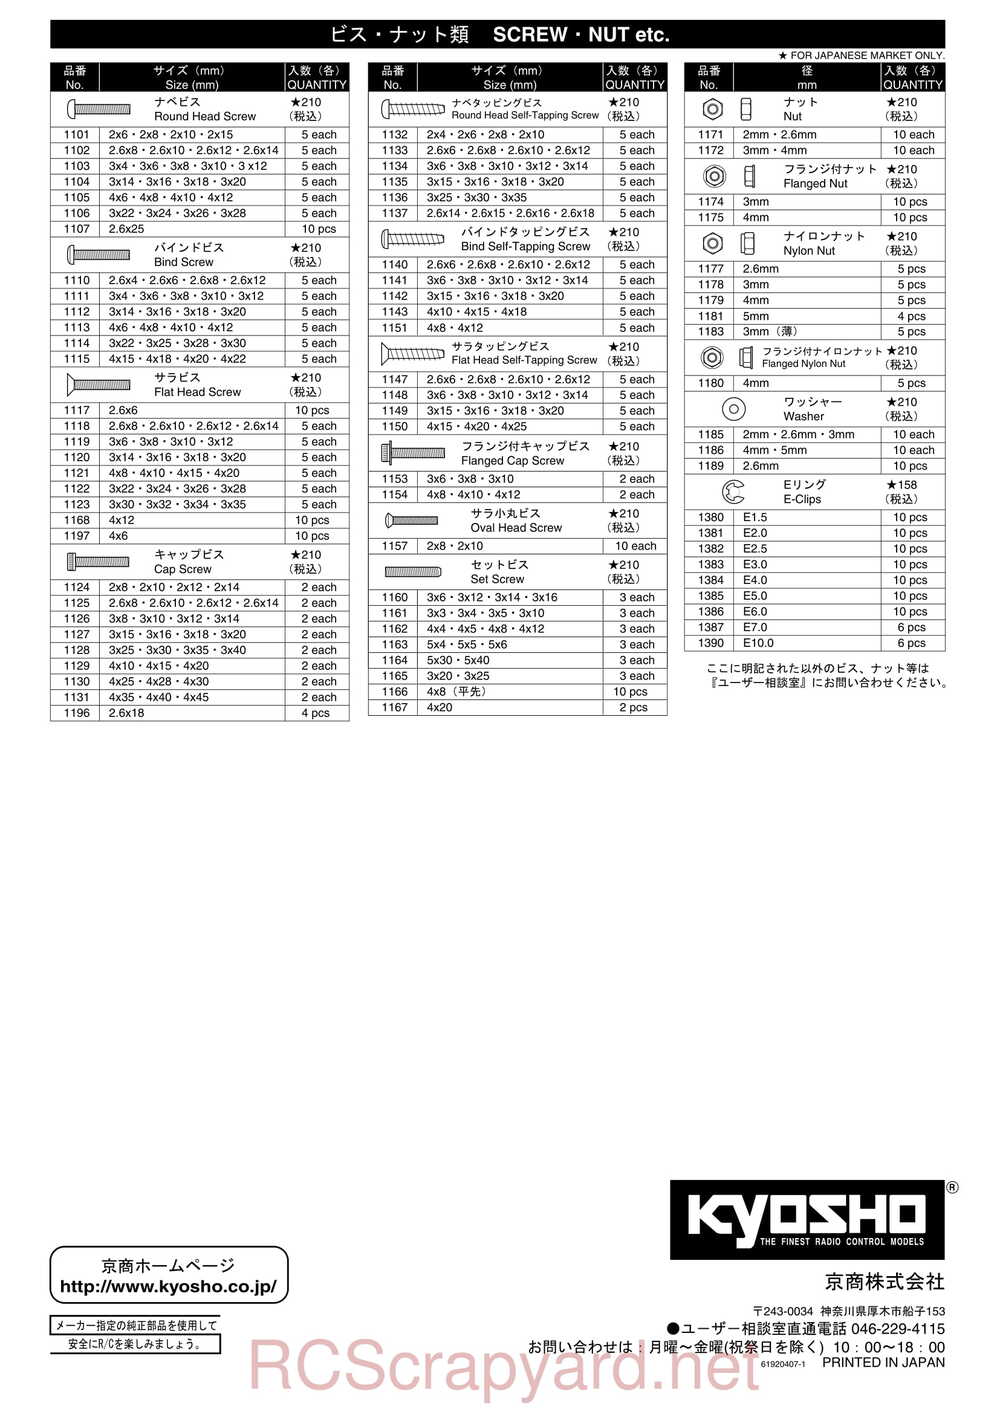 Kyosho - 31256 - V-One RRR - Manual - Page 37